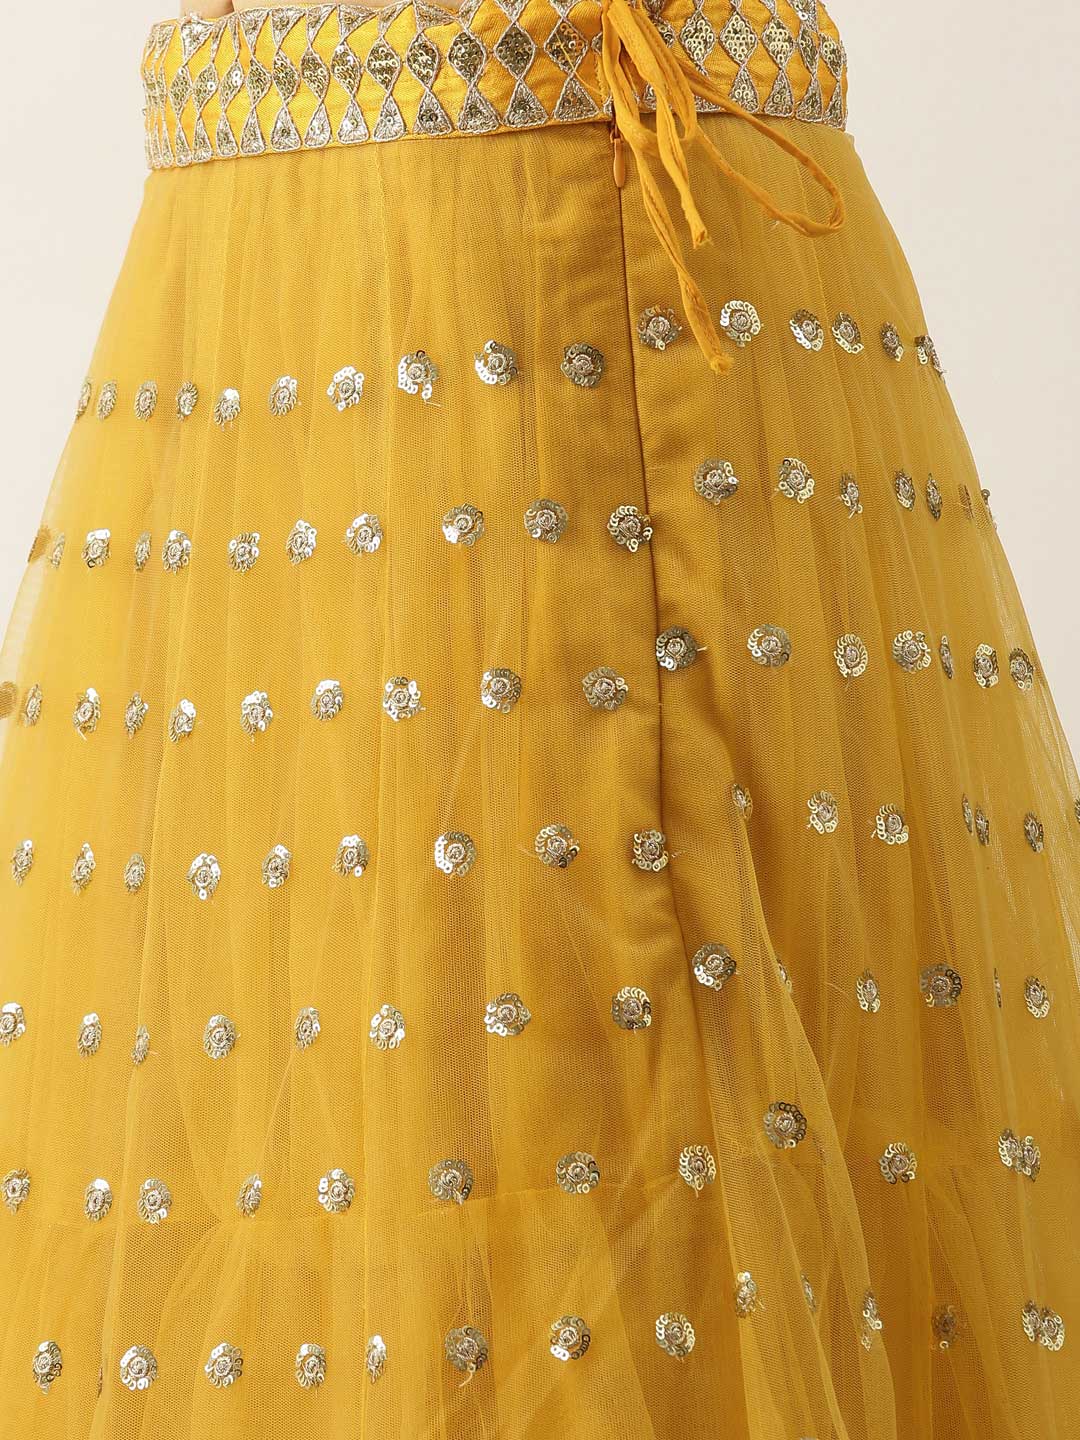 Yellow Embellished Semi Stitched Lehenga With Unstitched Blouse and Dupatta